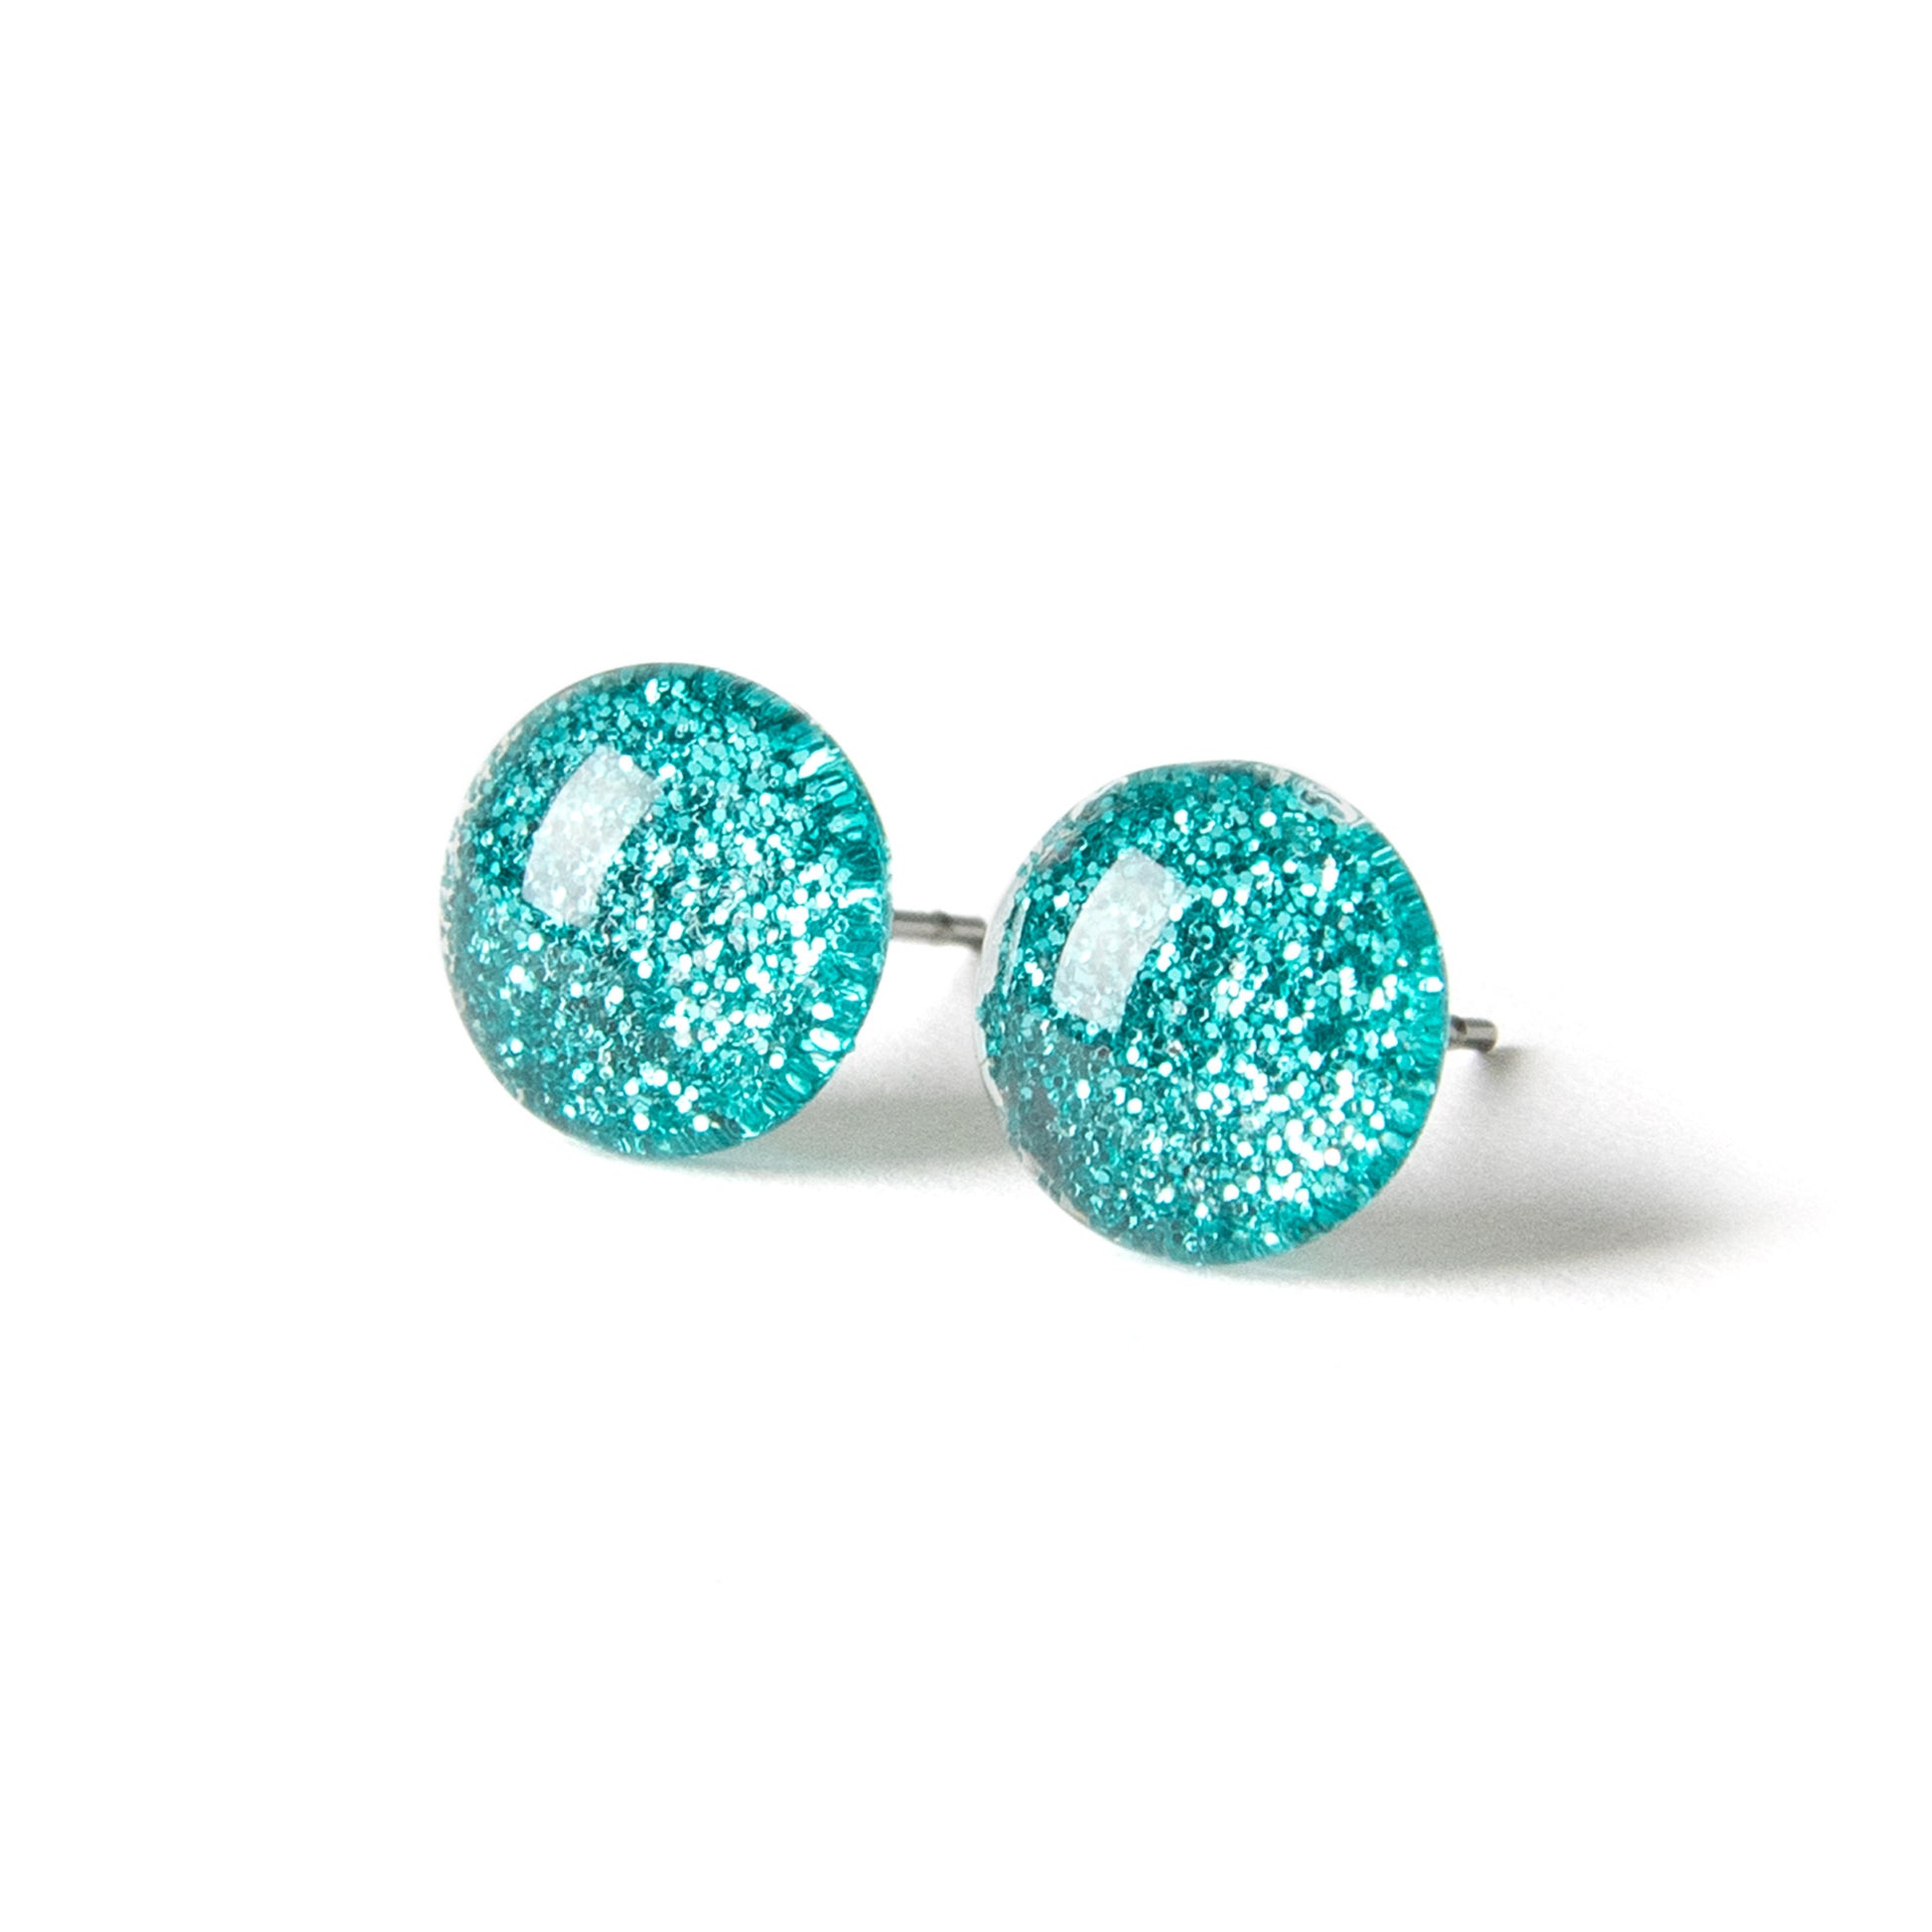 Blue Green Glitter Druzy Earrings - Large Stud Earrings - Colorful Round  Studs